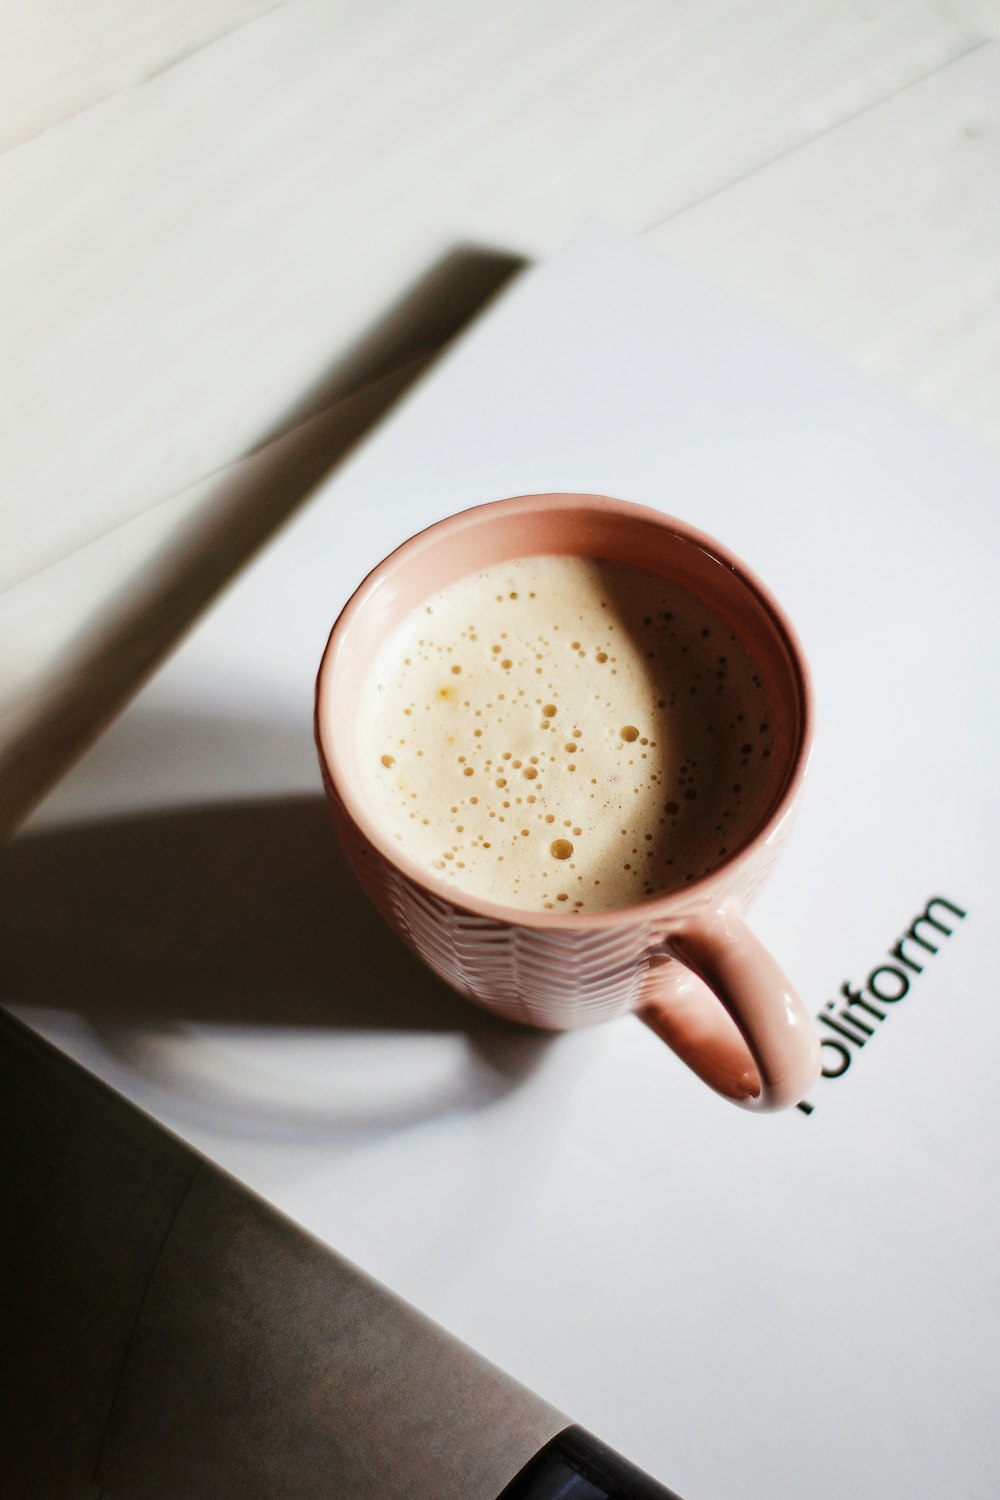 white and brown ceramic mug with brown liquid